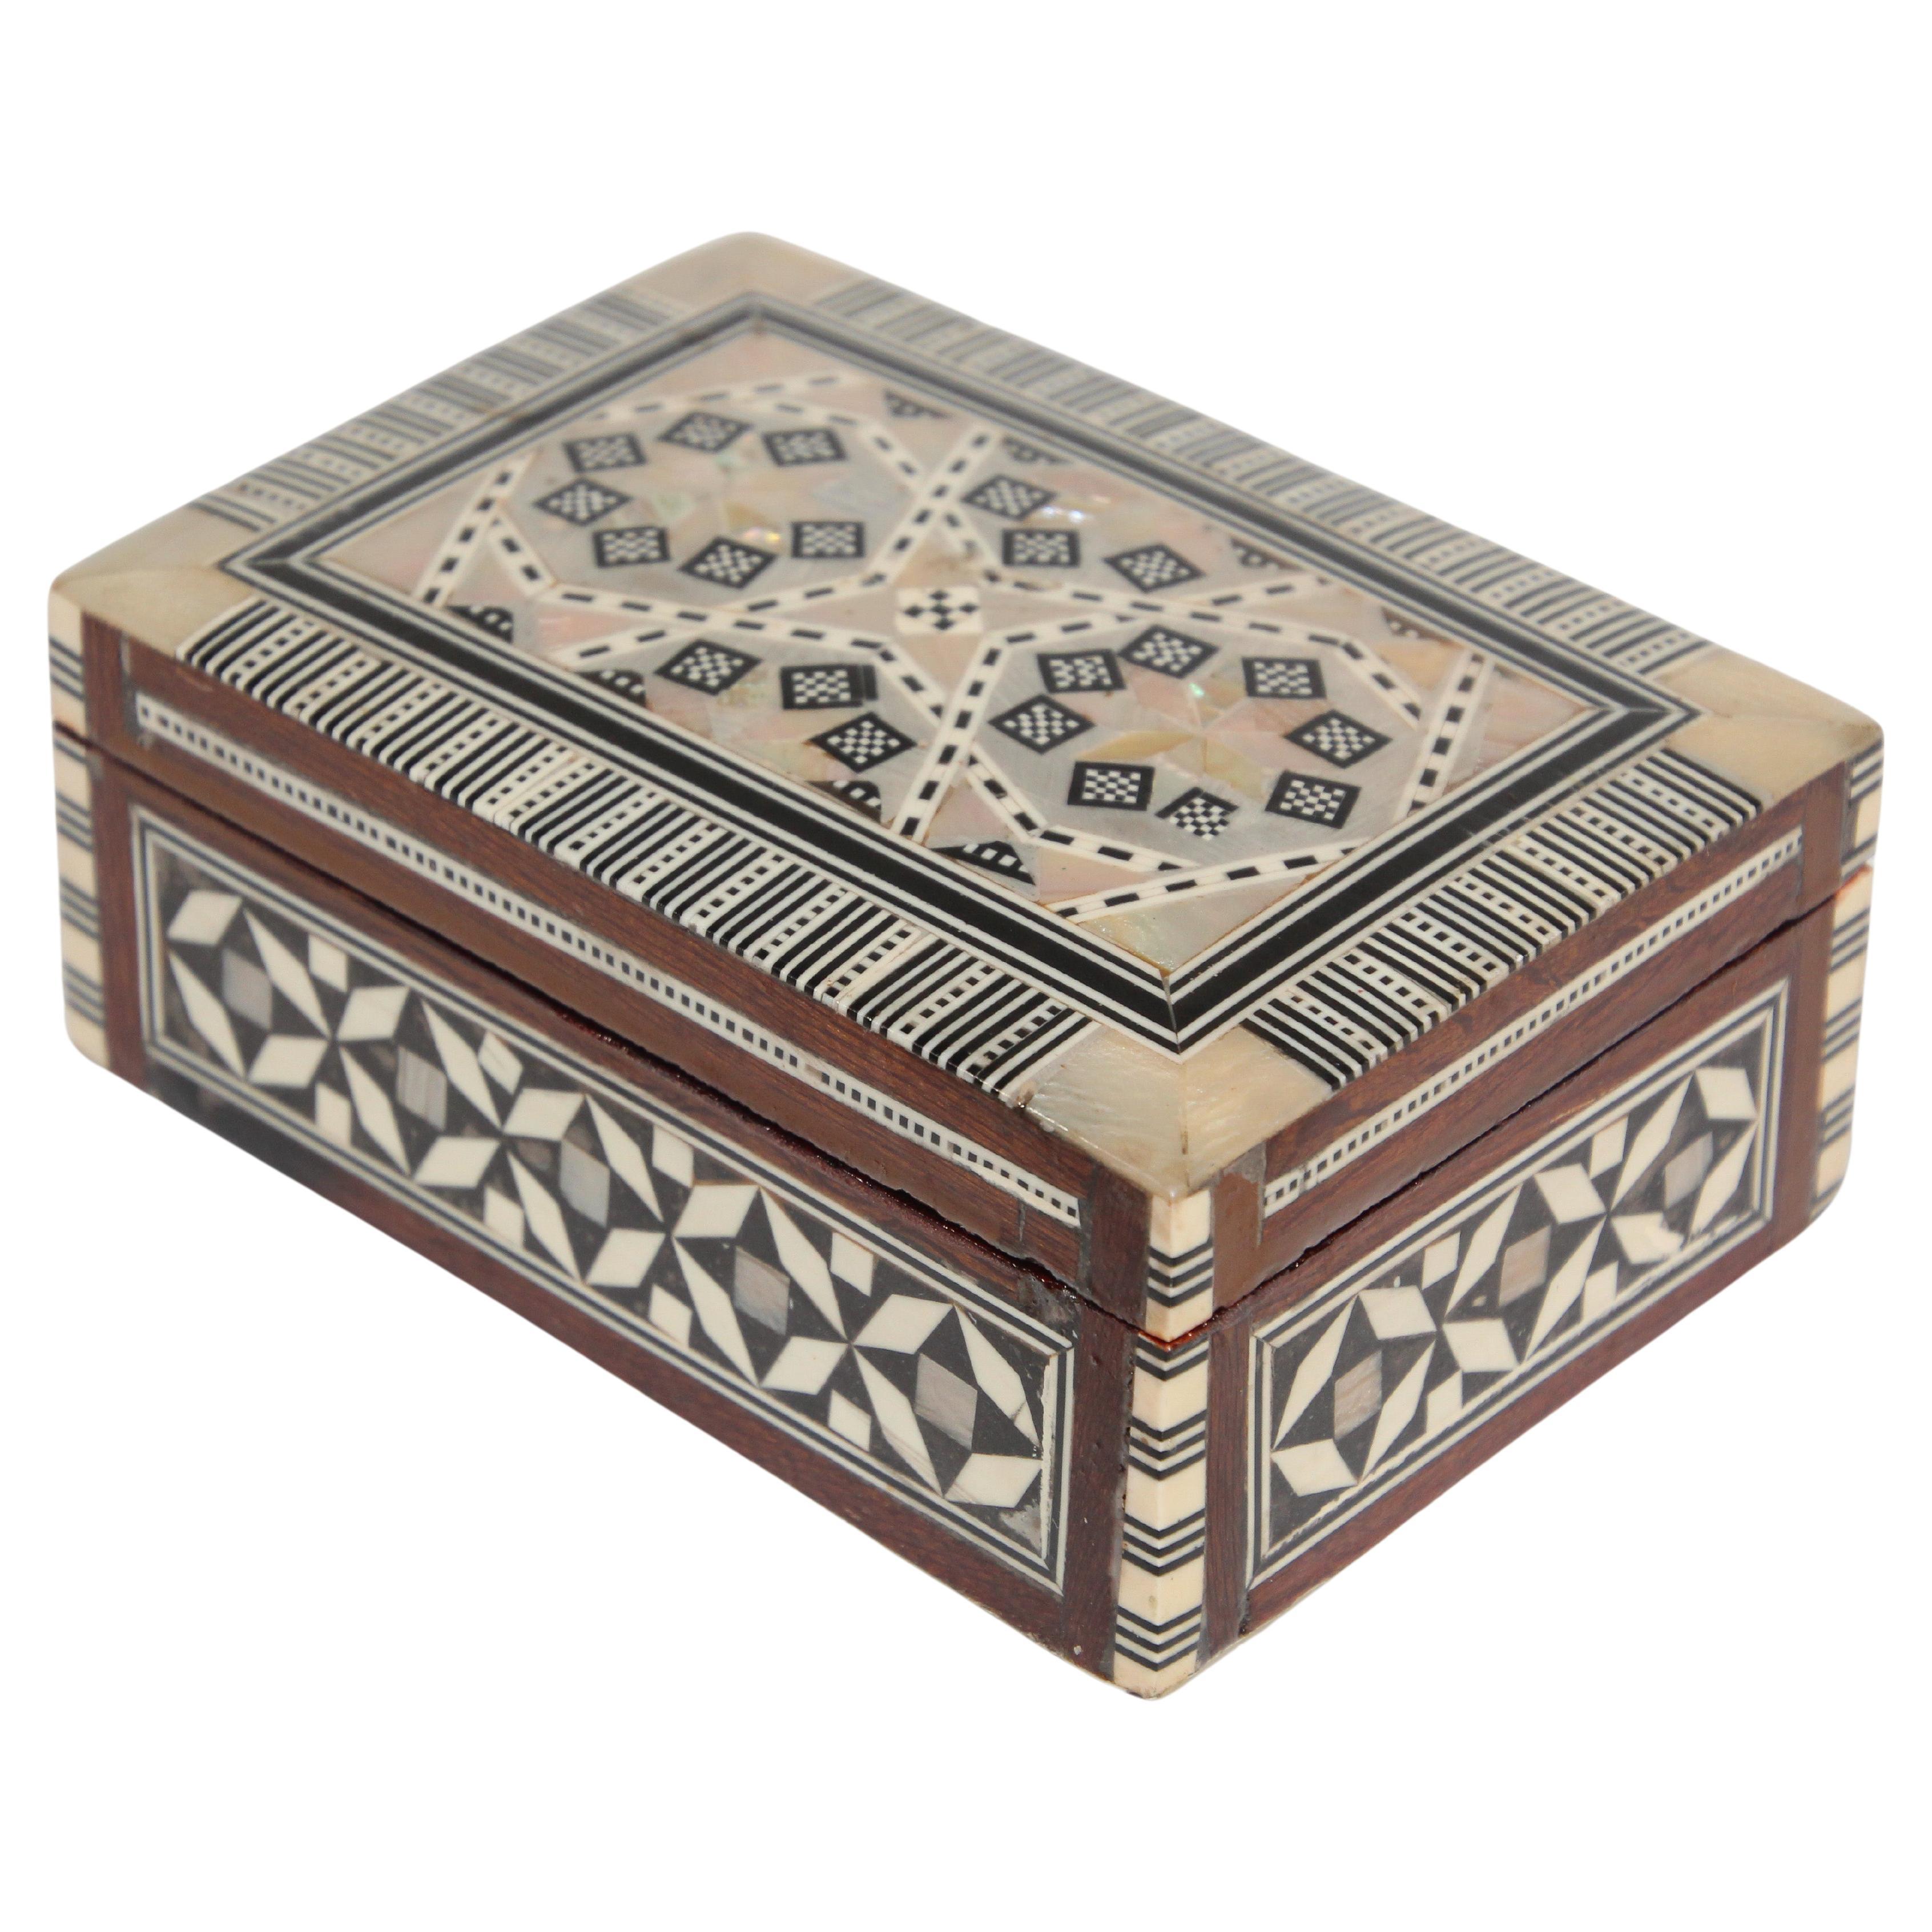 Middle Eastern Mosaic Moorish Mother of Pearl Inlaid Trinket Box